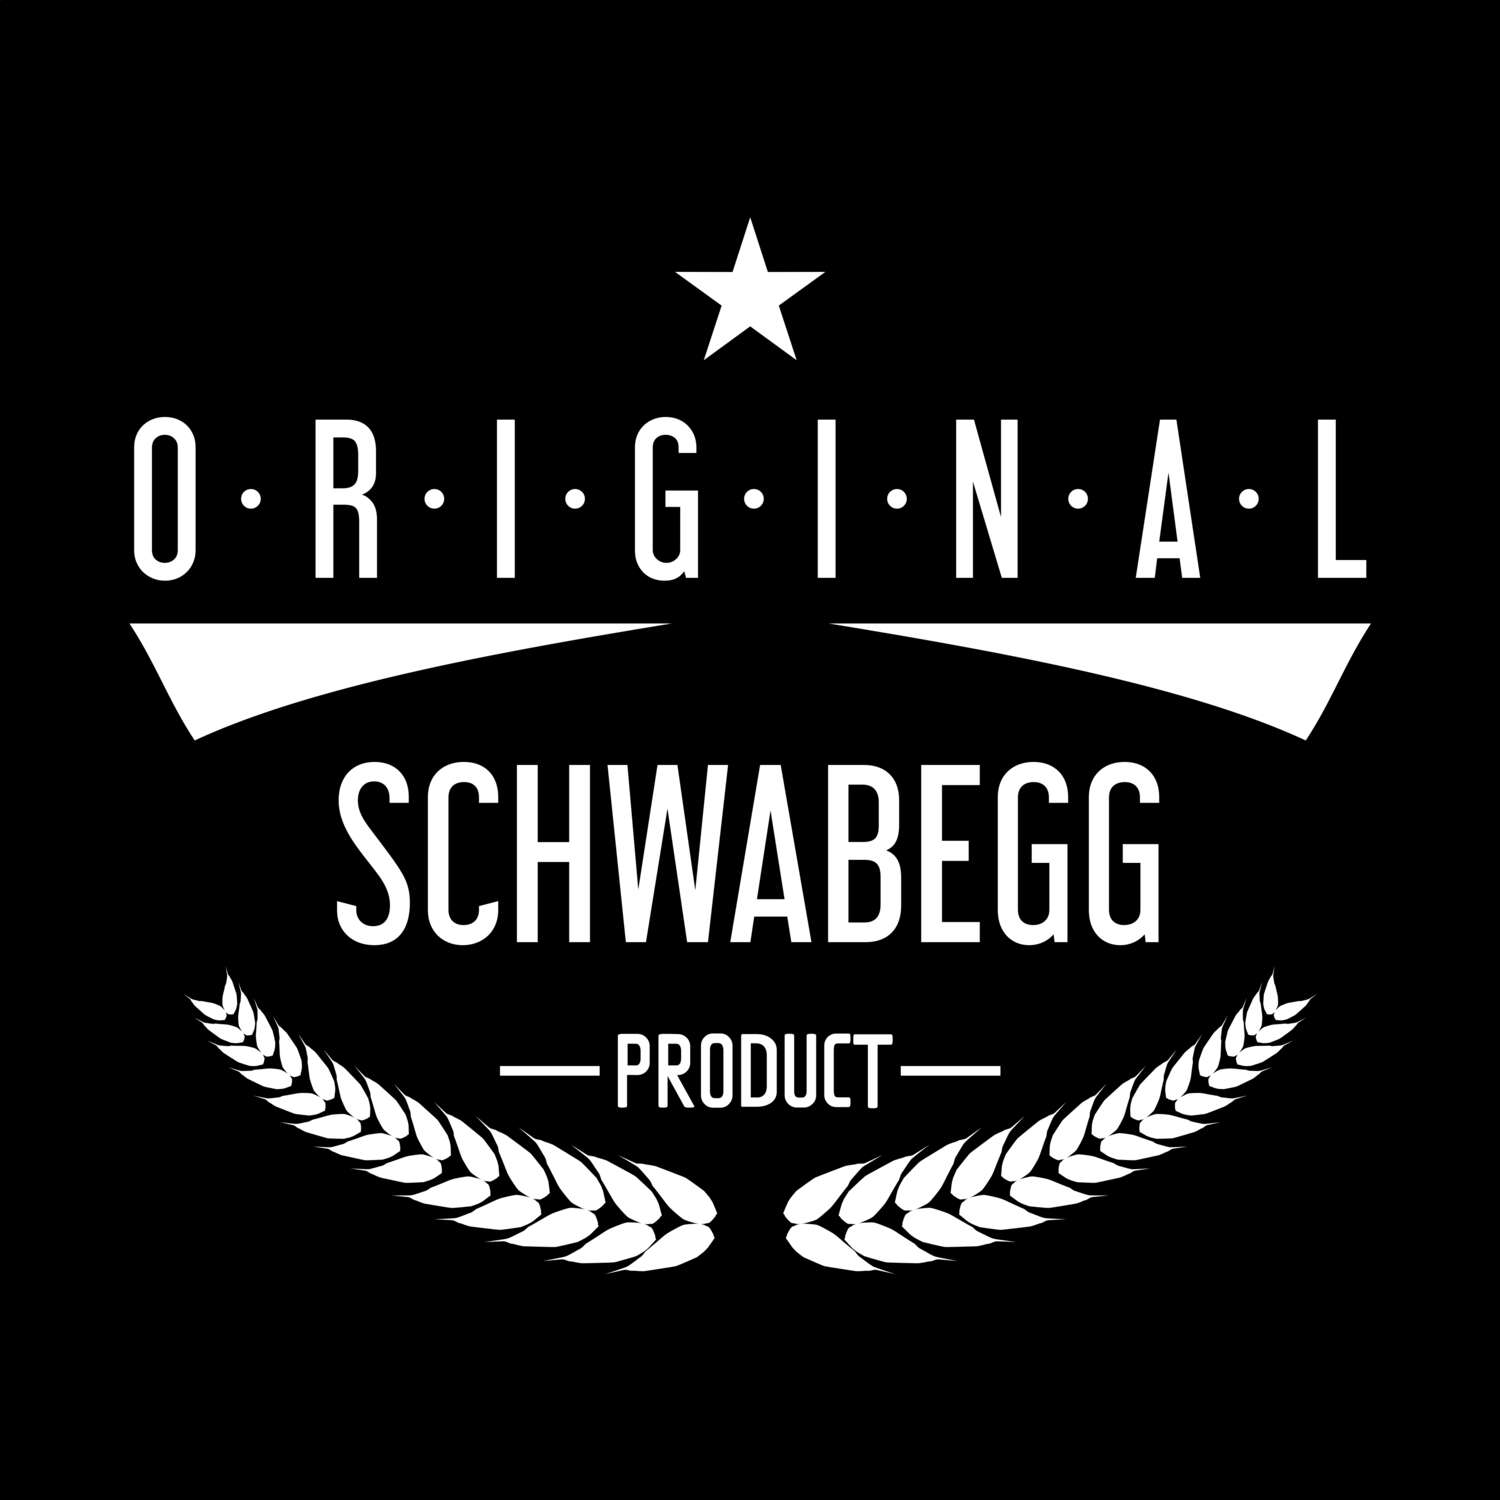 Schwabegg T-Shirt »Original Product«